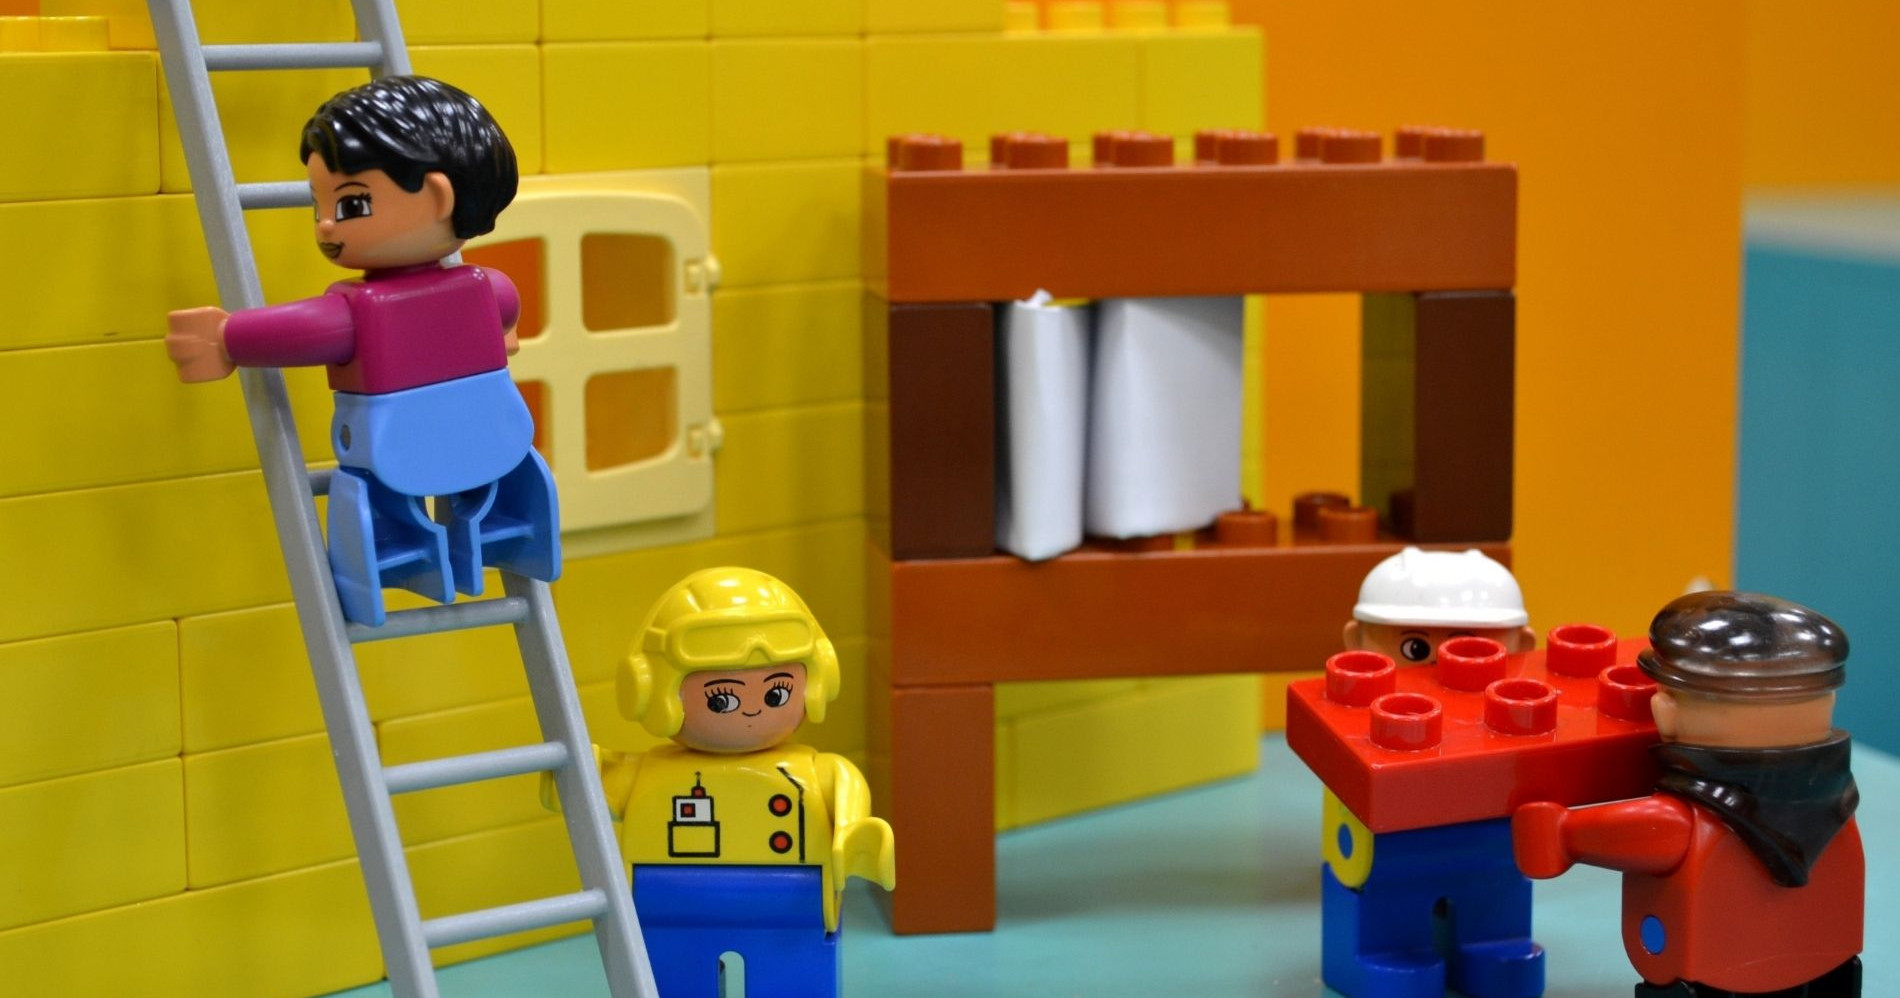 3 Ide Peluang Usaha dari Mainan Lego Illustration Bisnis Muda - Image: Canva